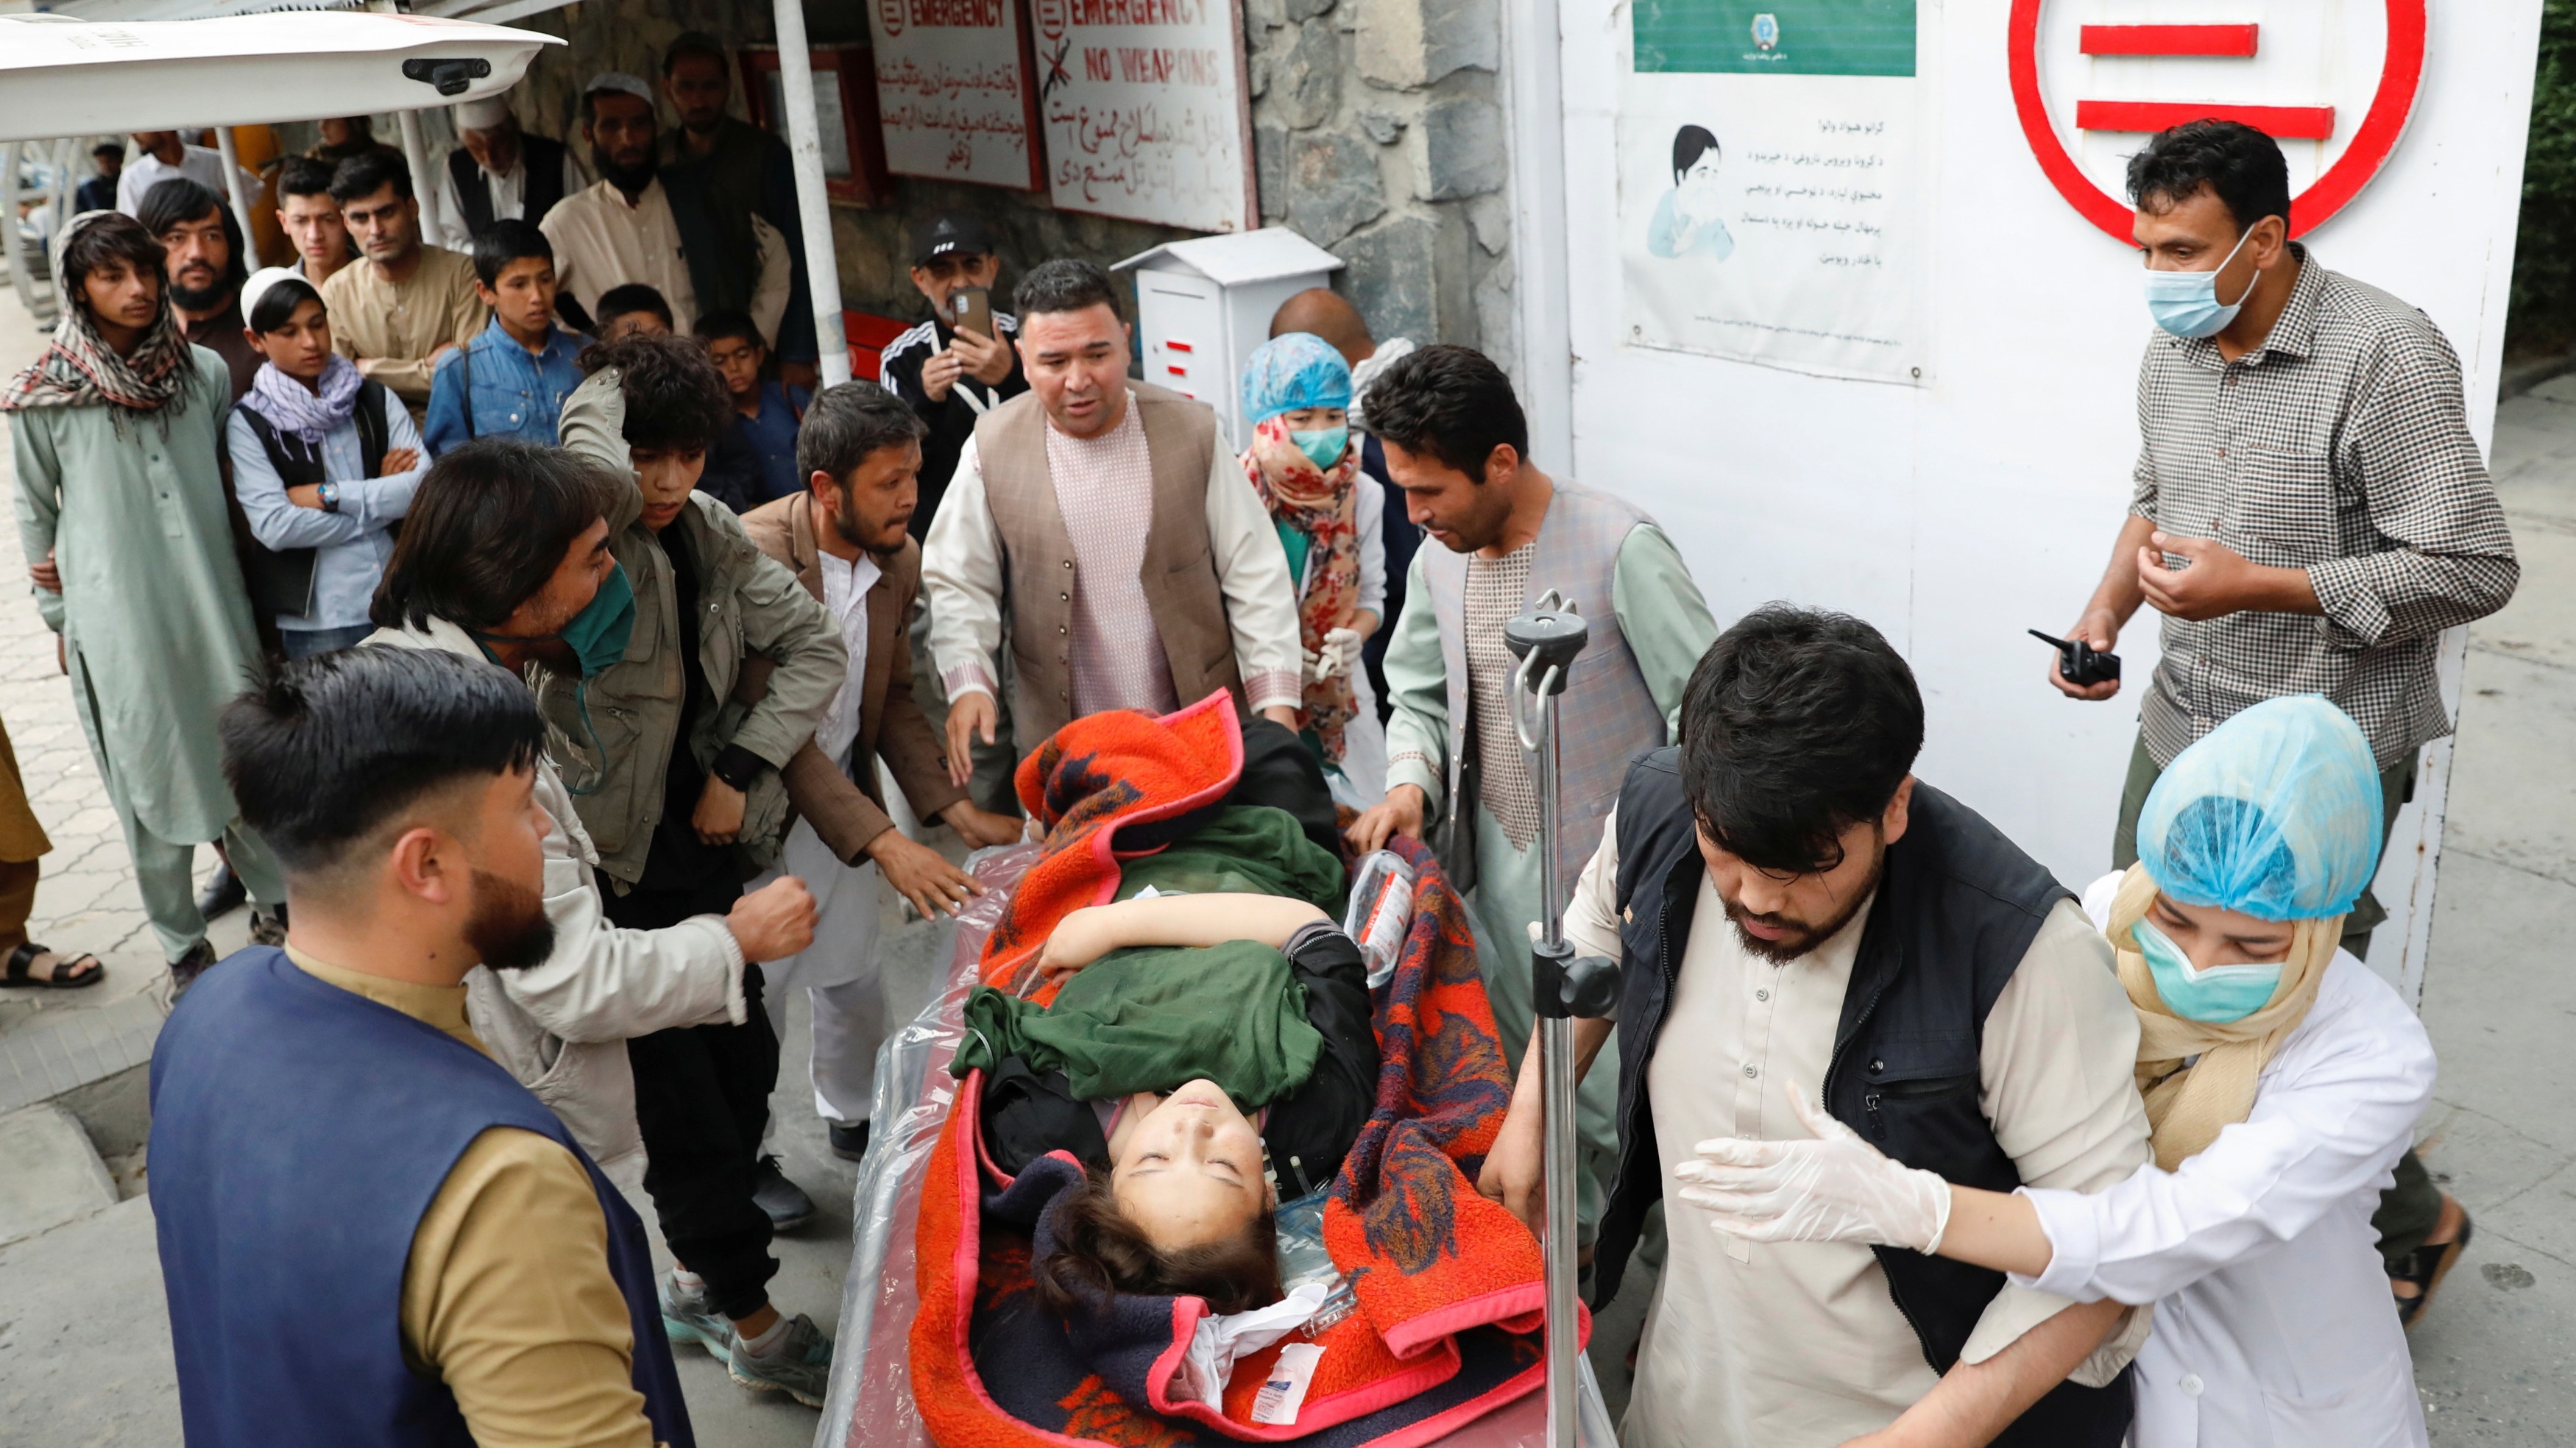 Car bombing at Afghan school in Kabul kills 55, injures over 150